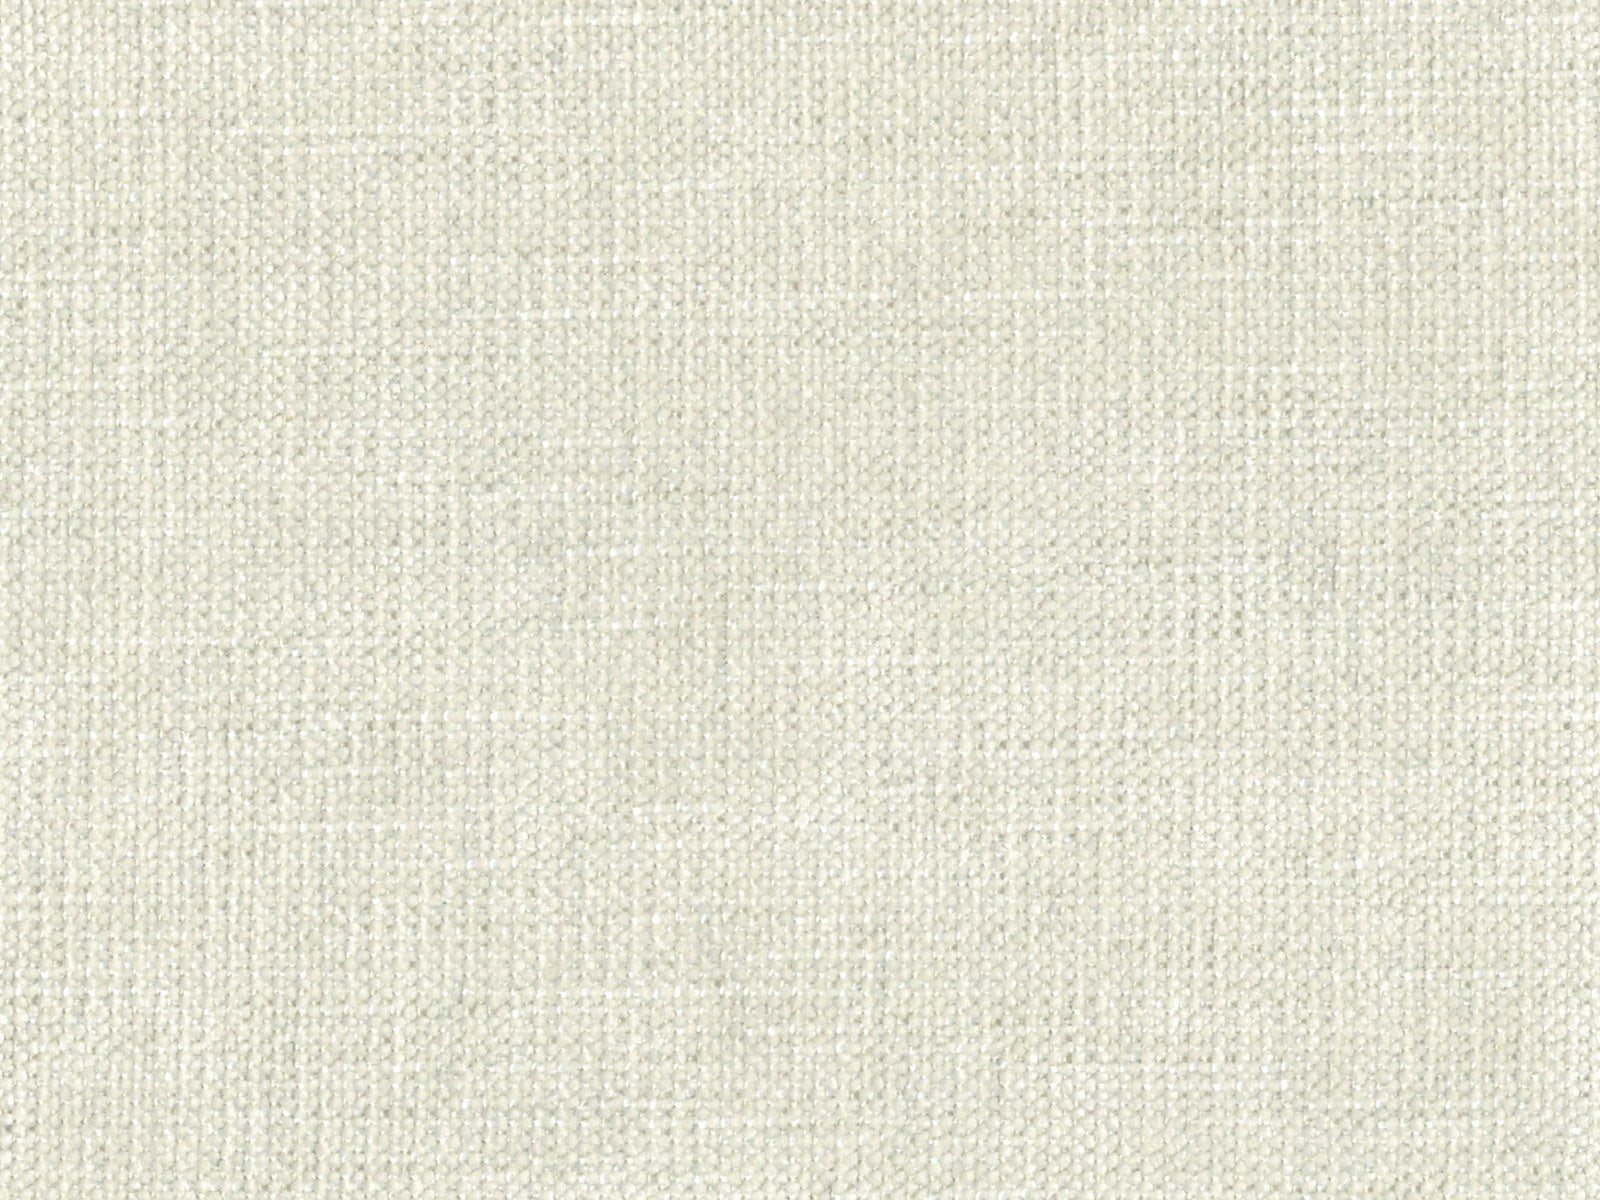 Avellino Fabric Samples - Rydan Interiors